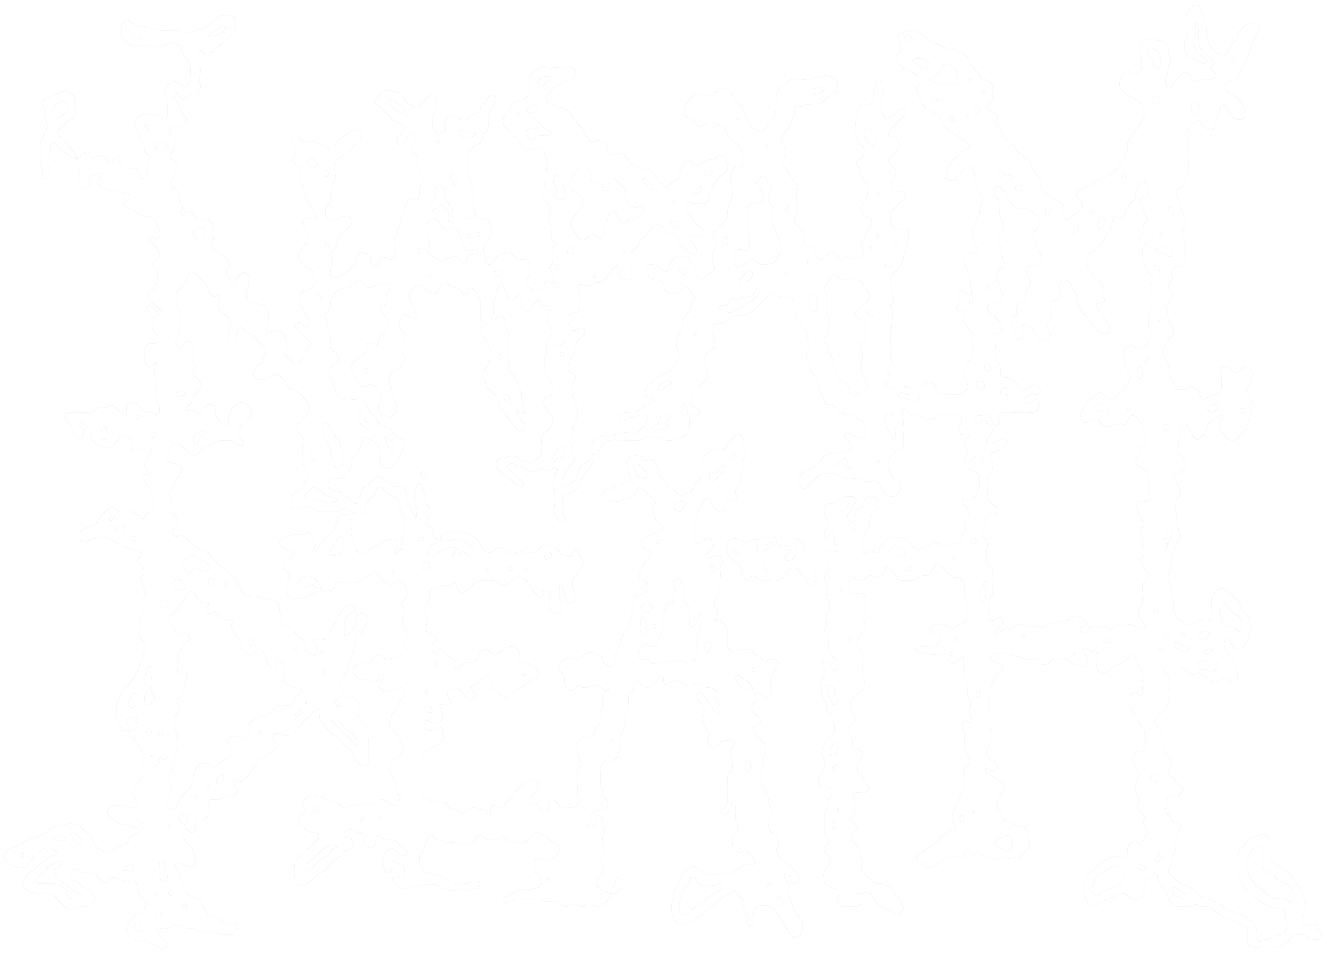 Death Hate - Encyclopaedia Metallum: The Metal Archives